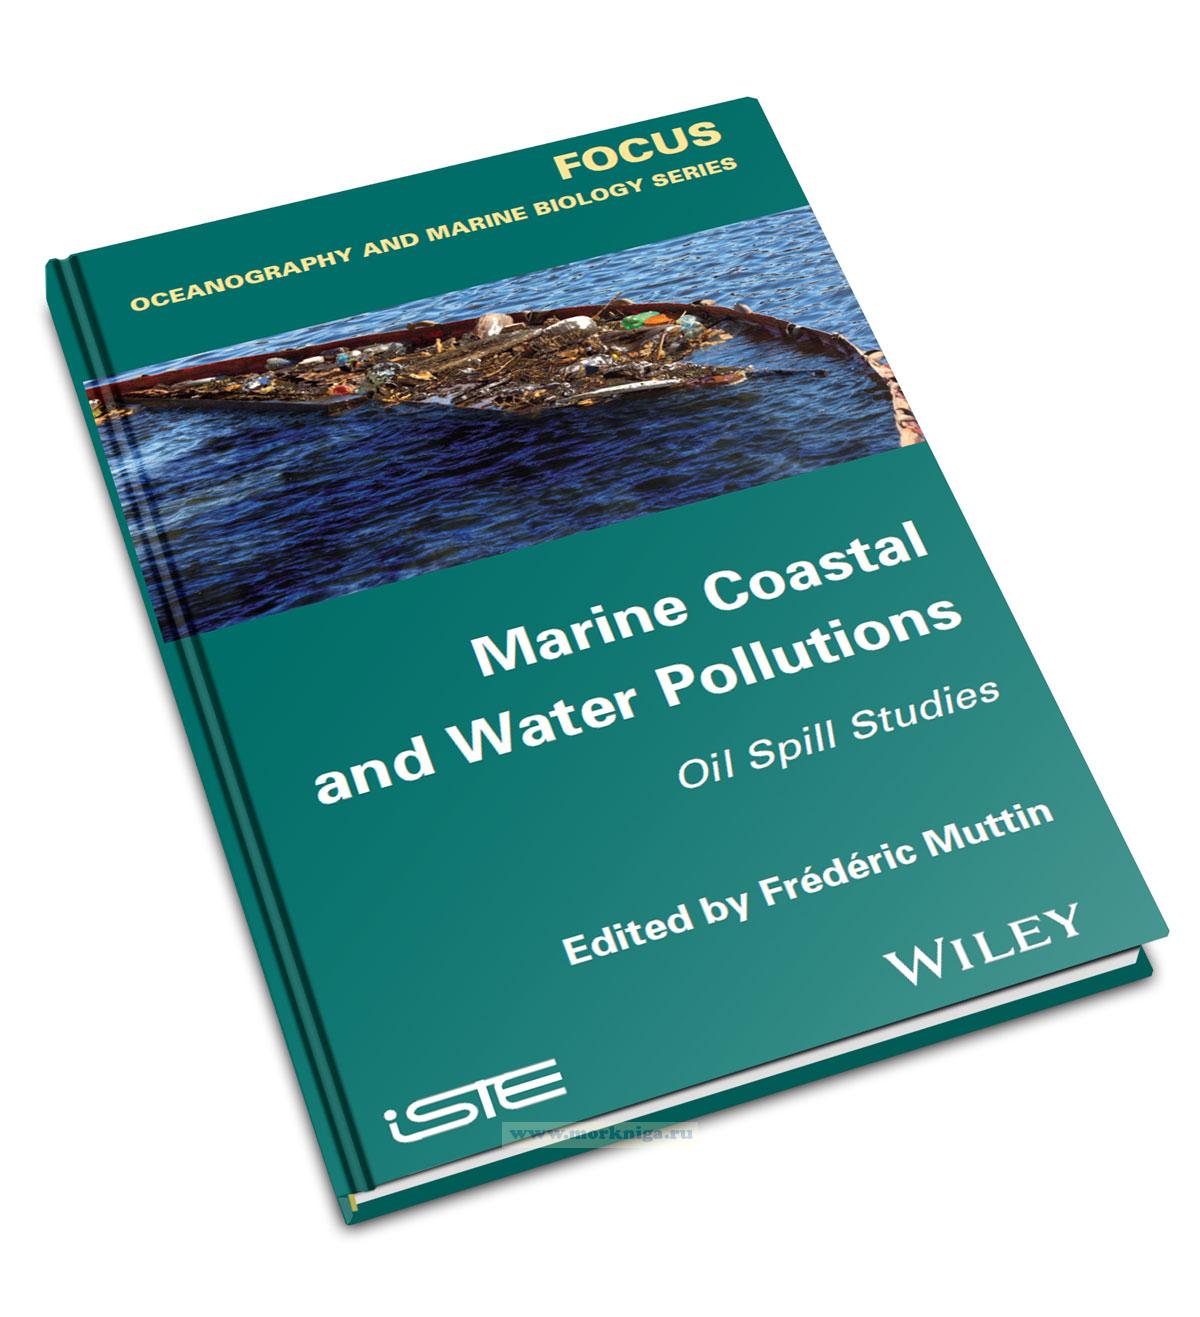 Marine Coastal and Water Pollutions: Oil Spill Studies/Загрязнение морских прибрежных зон и воды: исследования разливов нефти